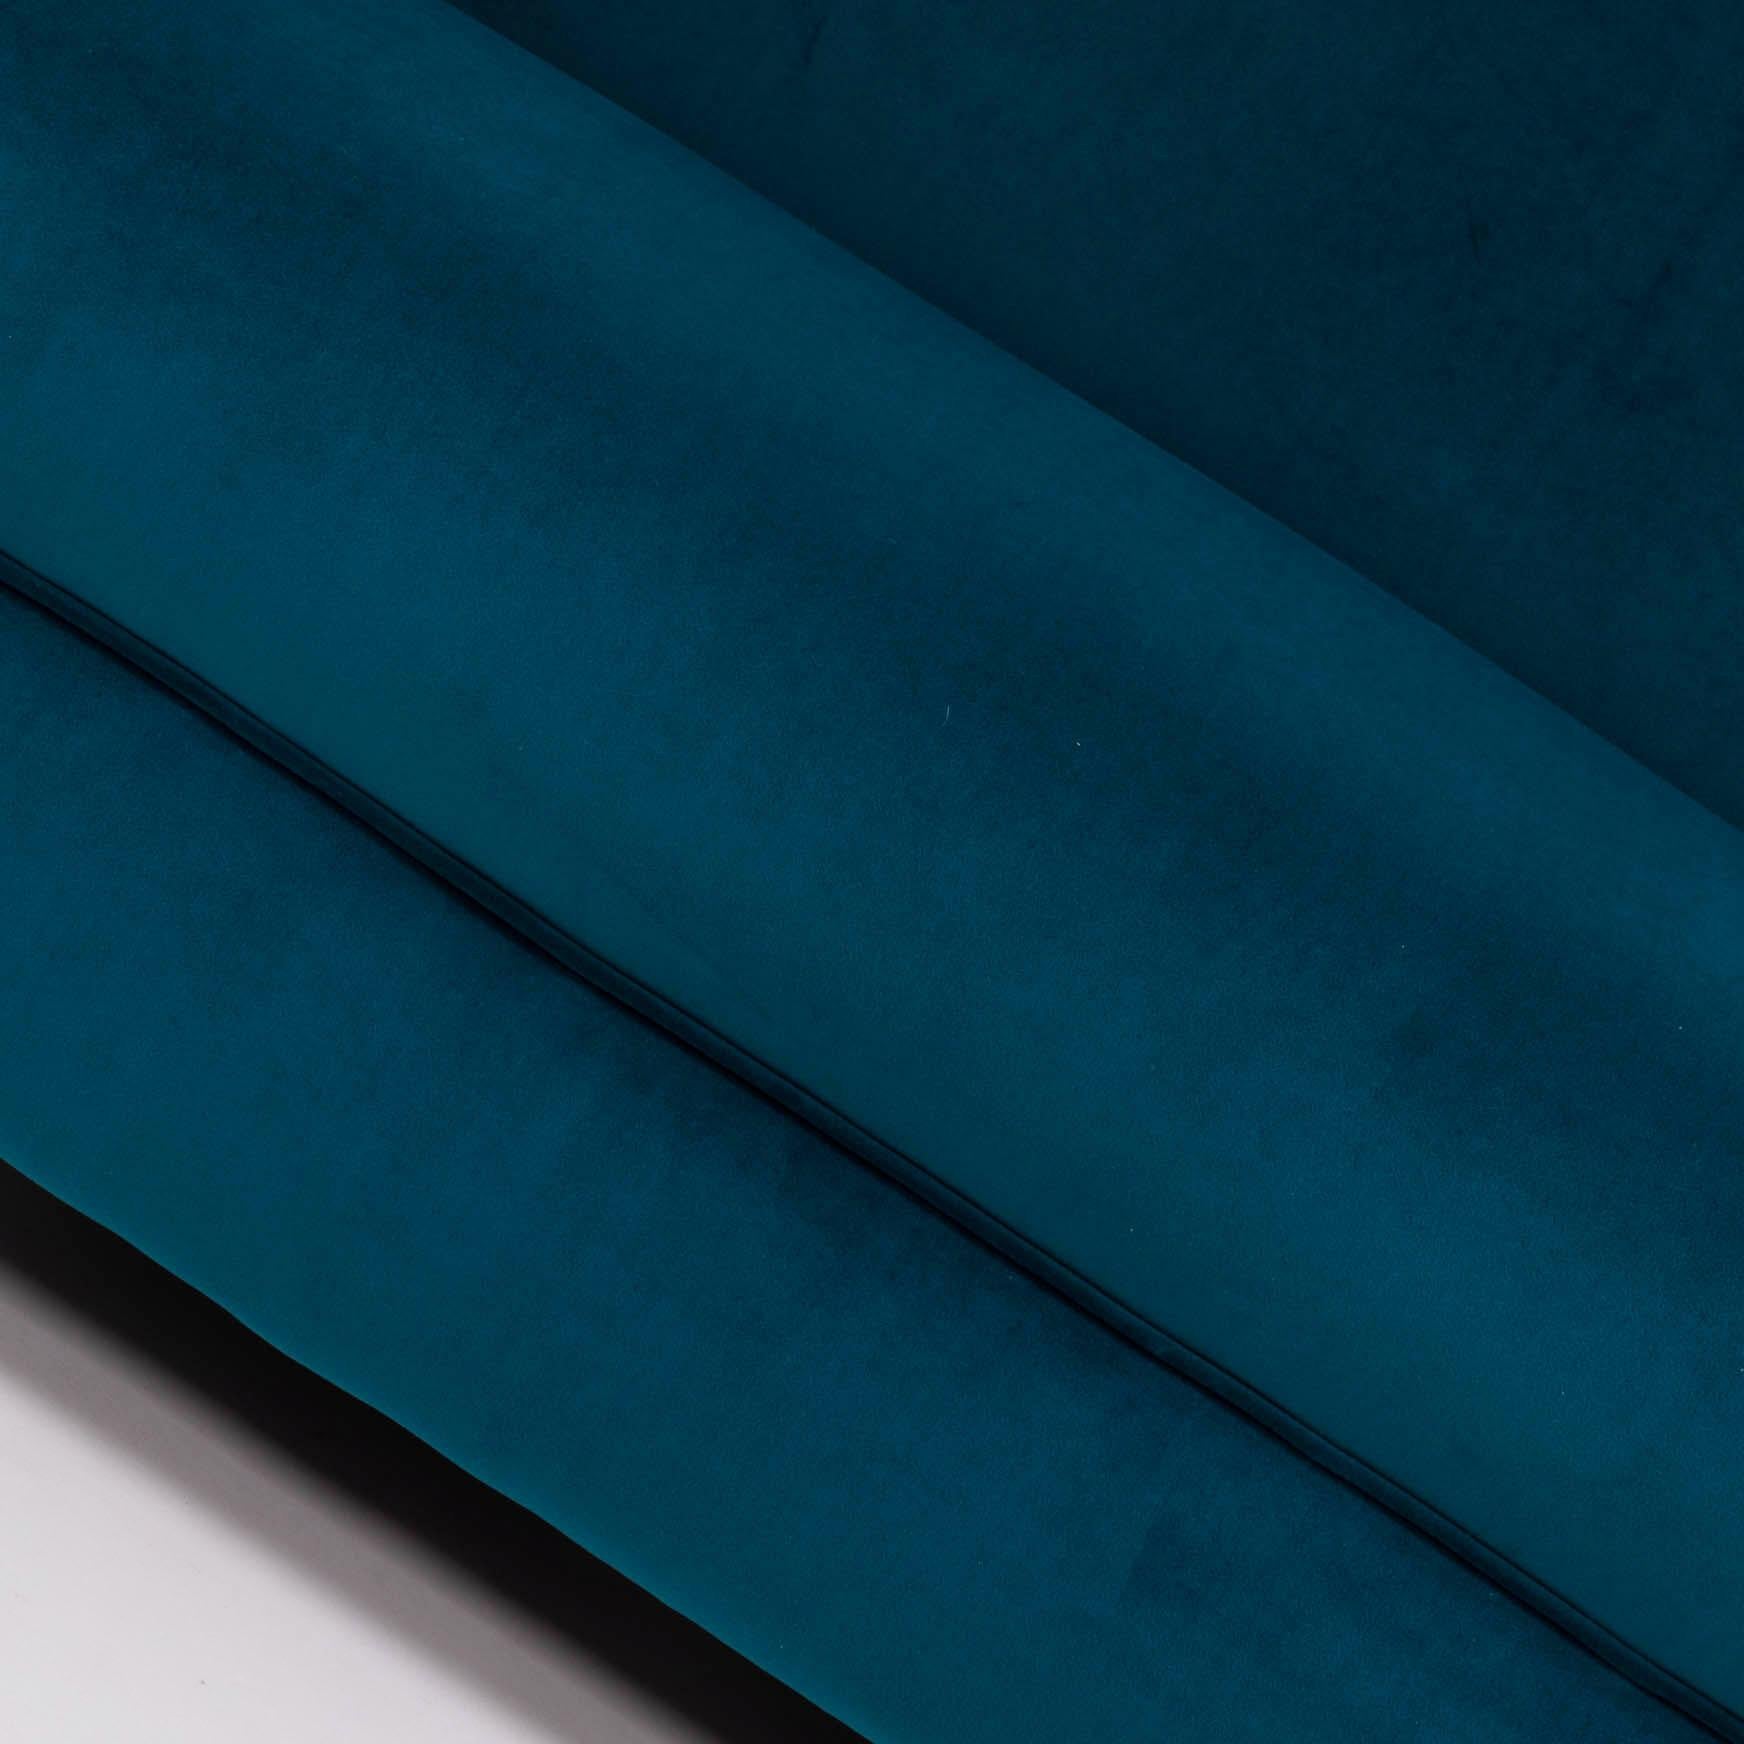 Original 1930s Art Deco Curved Blue Teal Velvet Sofa Newly Upholstered 3